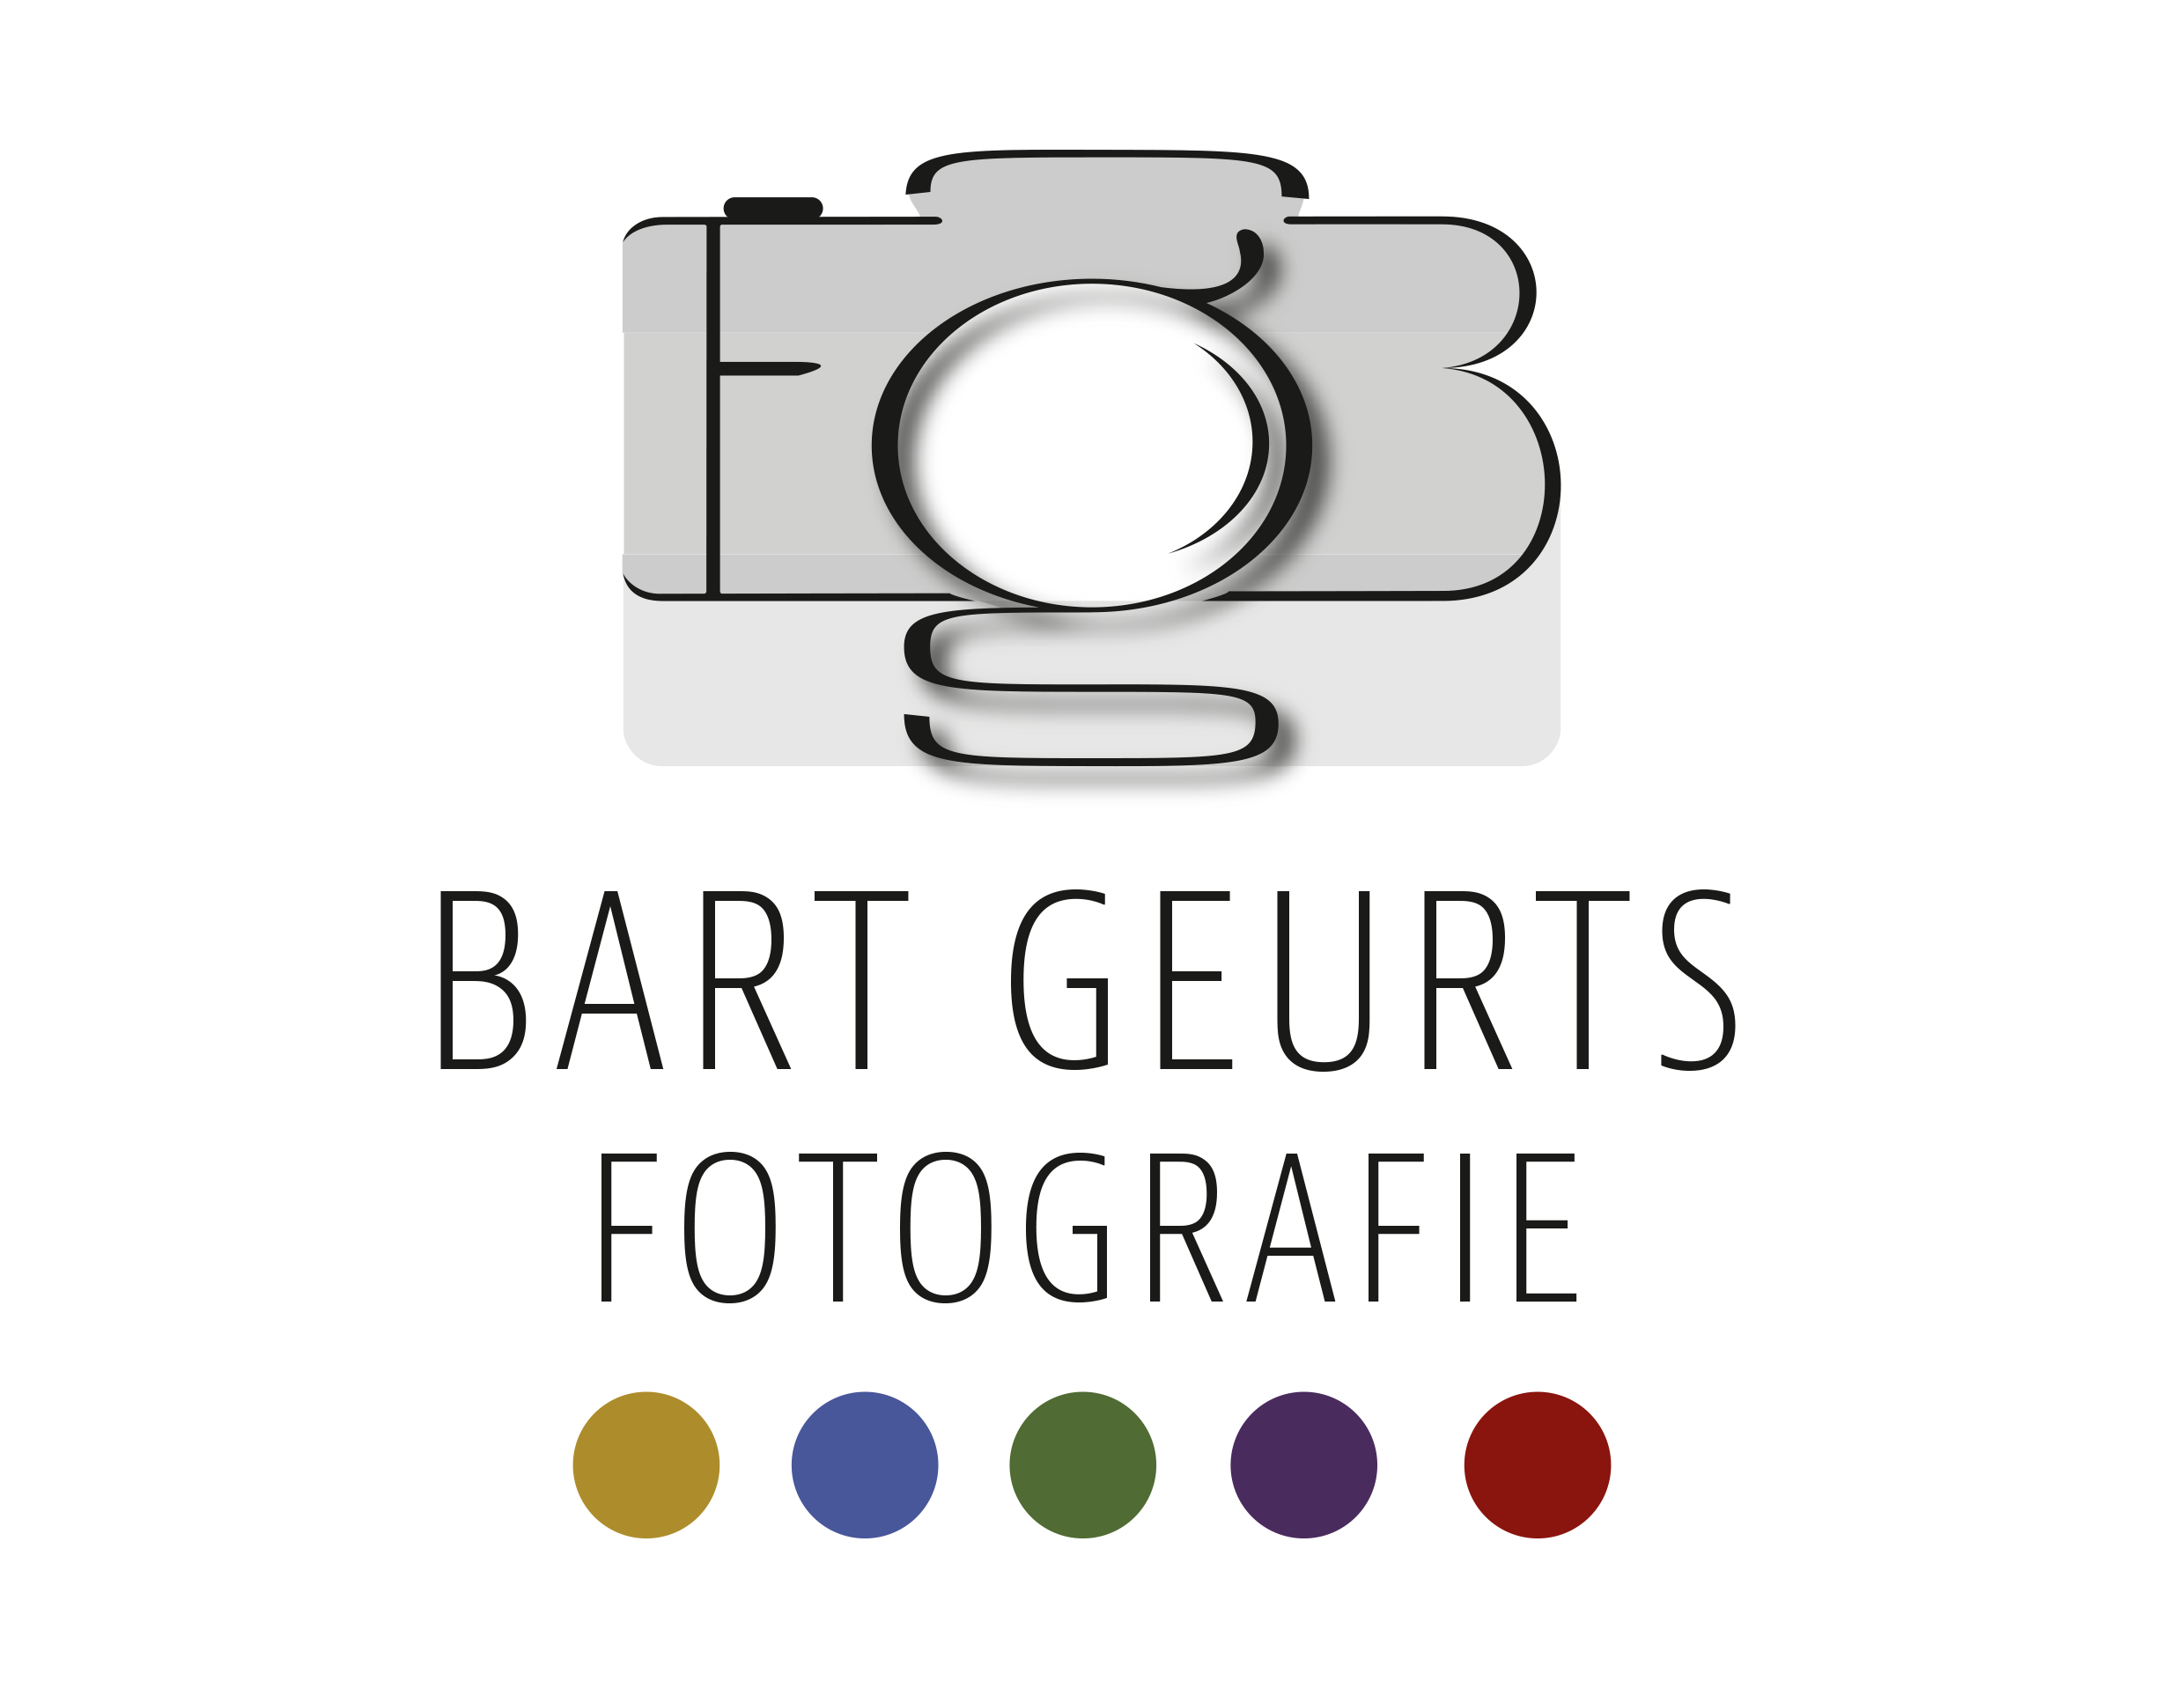 Bart Geurts Fotografie